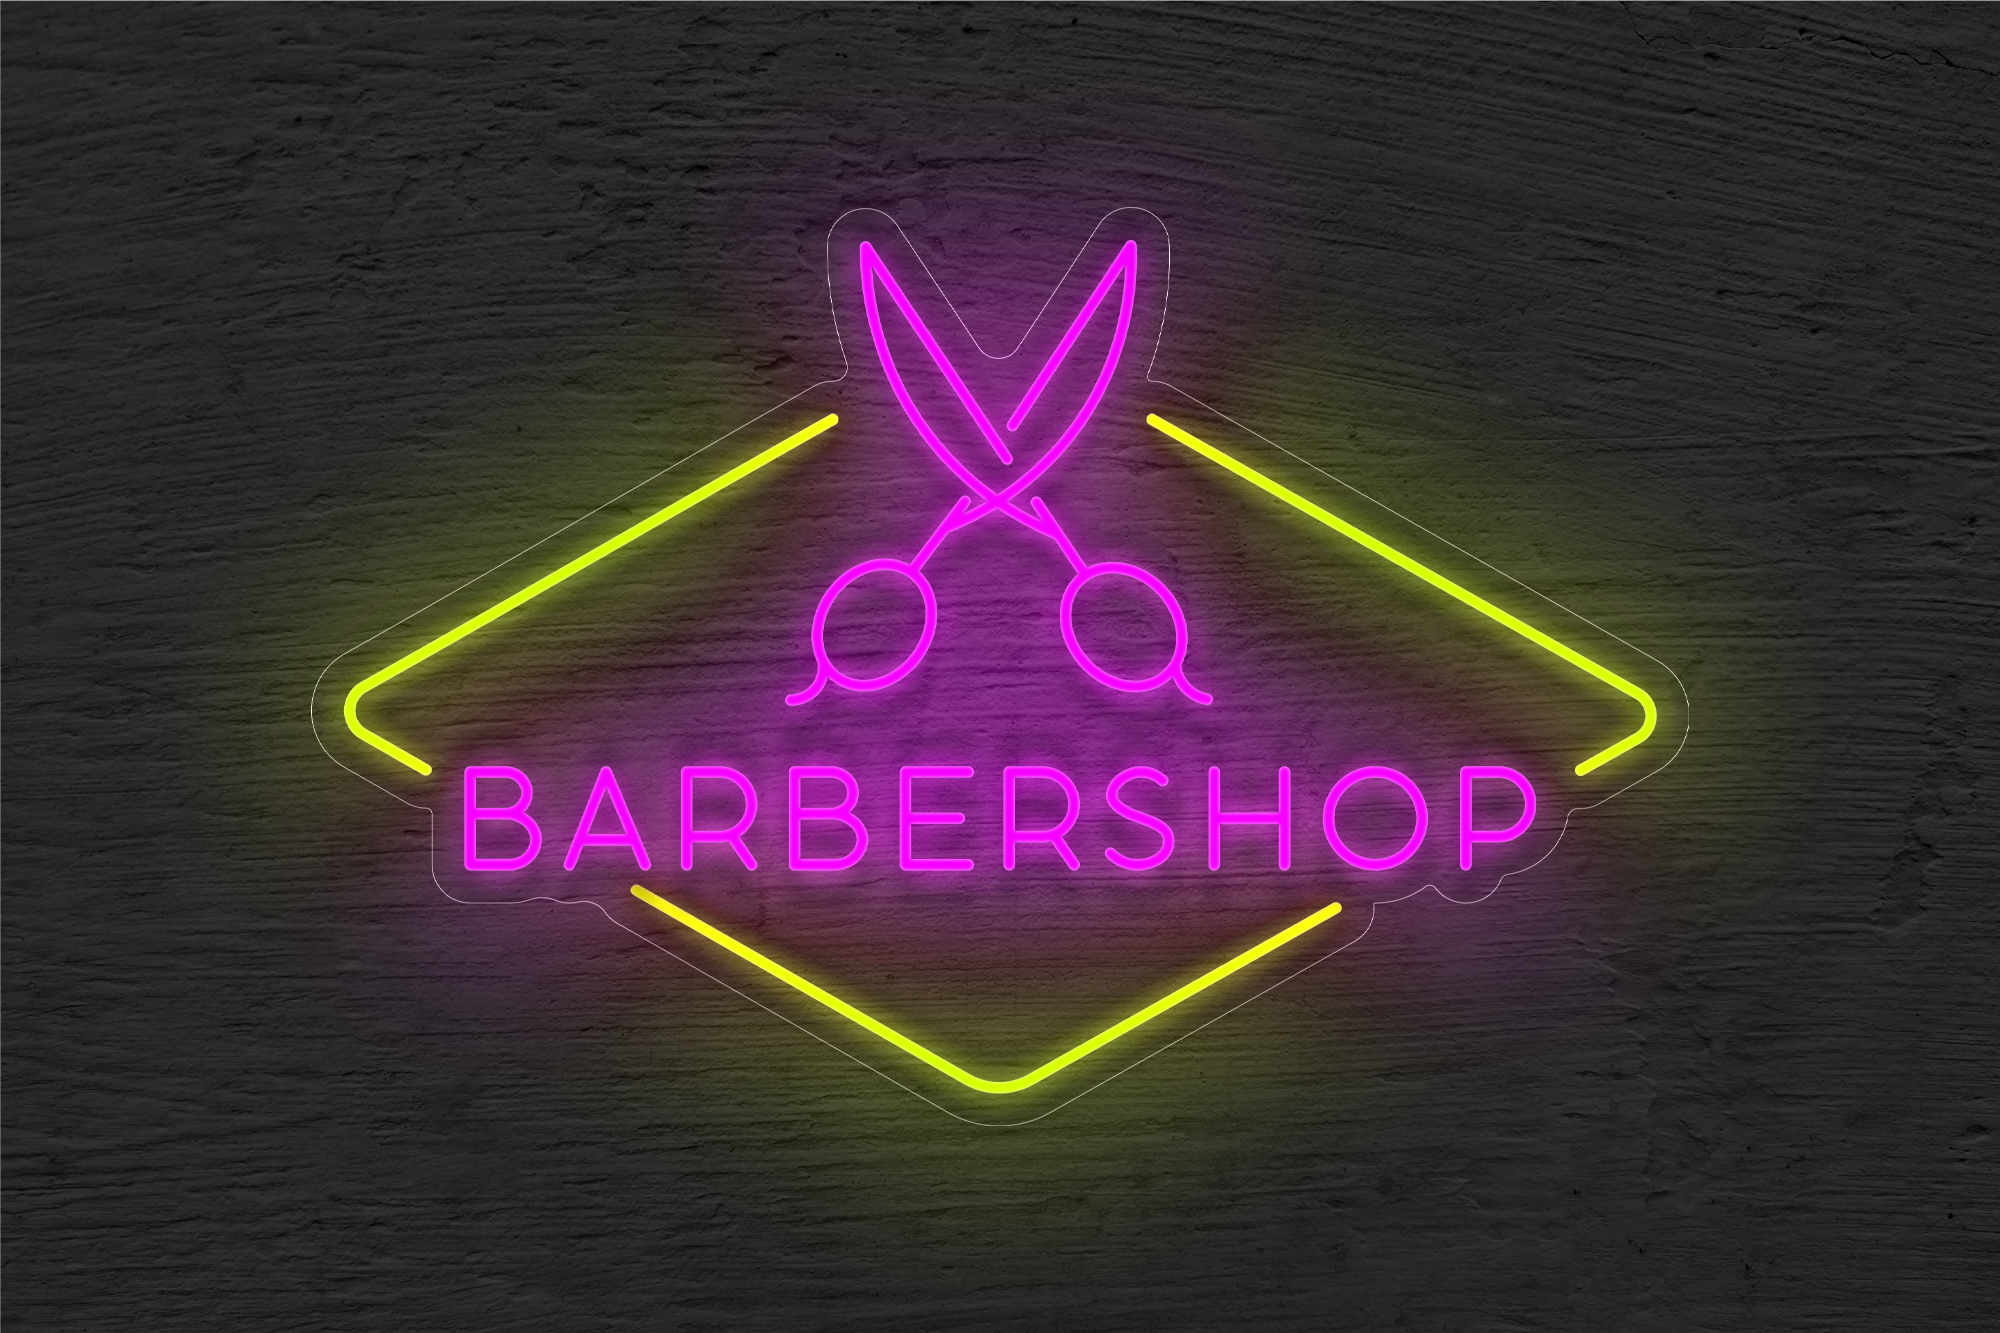 "Barbershop" with Diamond Border and Scissor LED Neon Sign